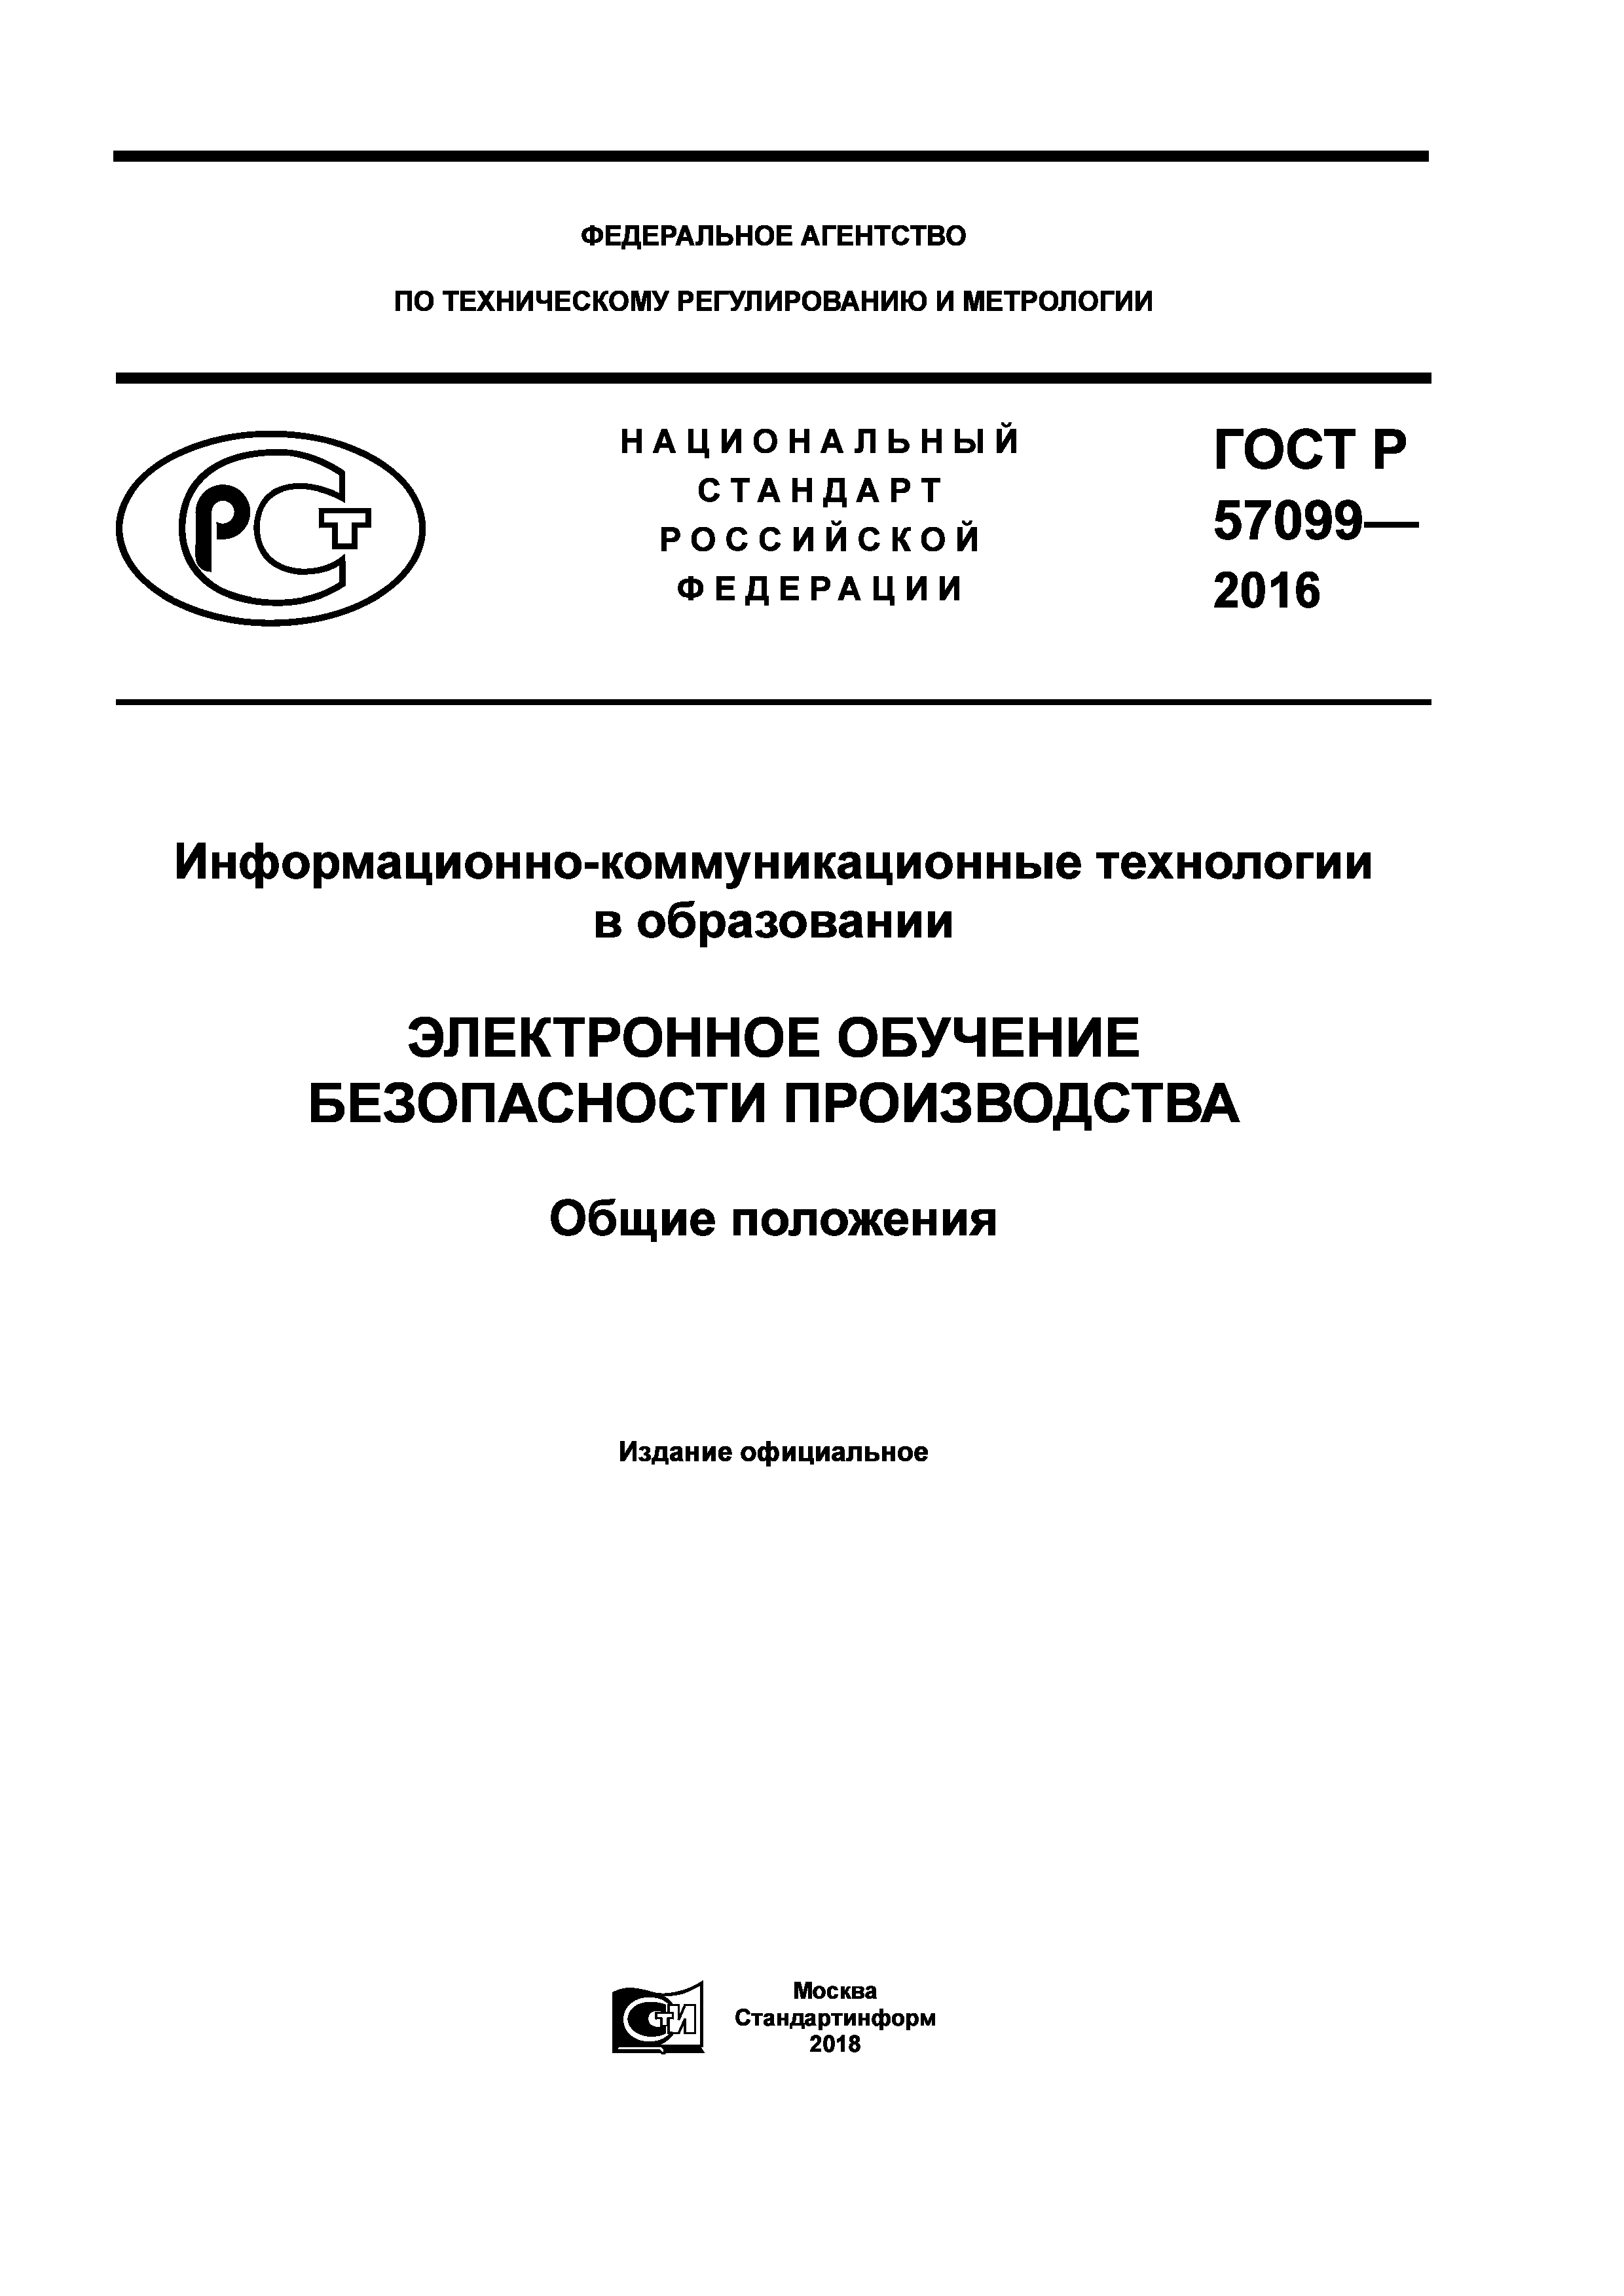 ГОСТ Р 57099-2016